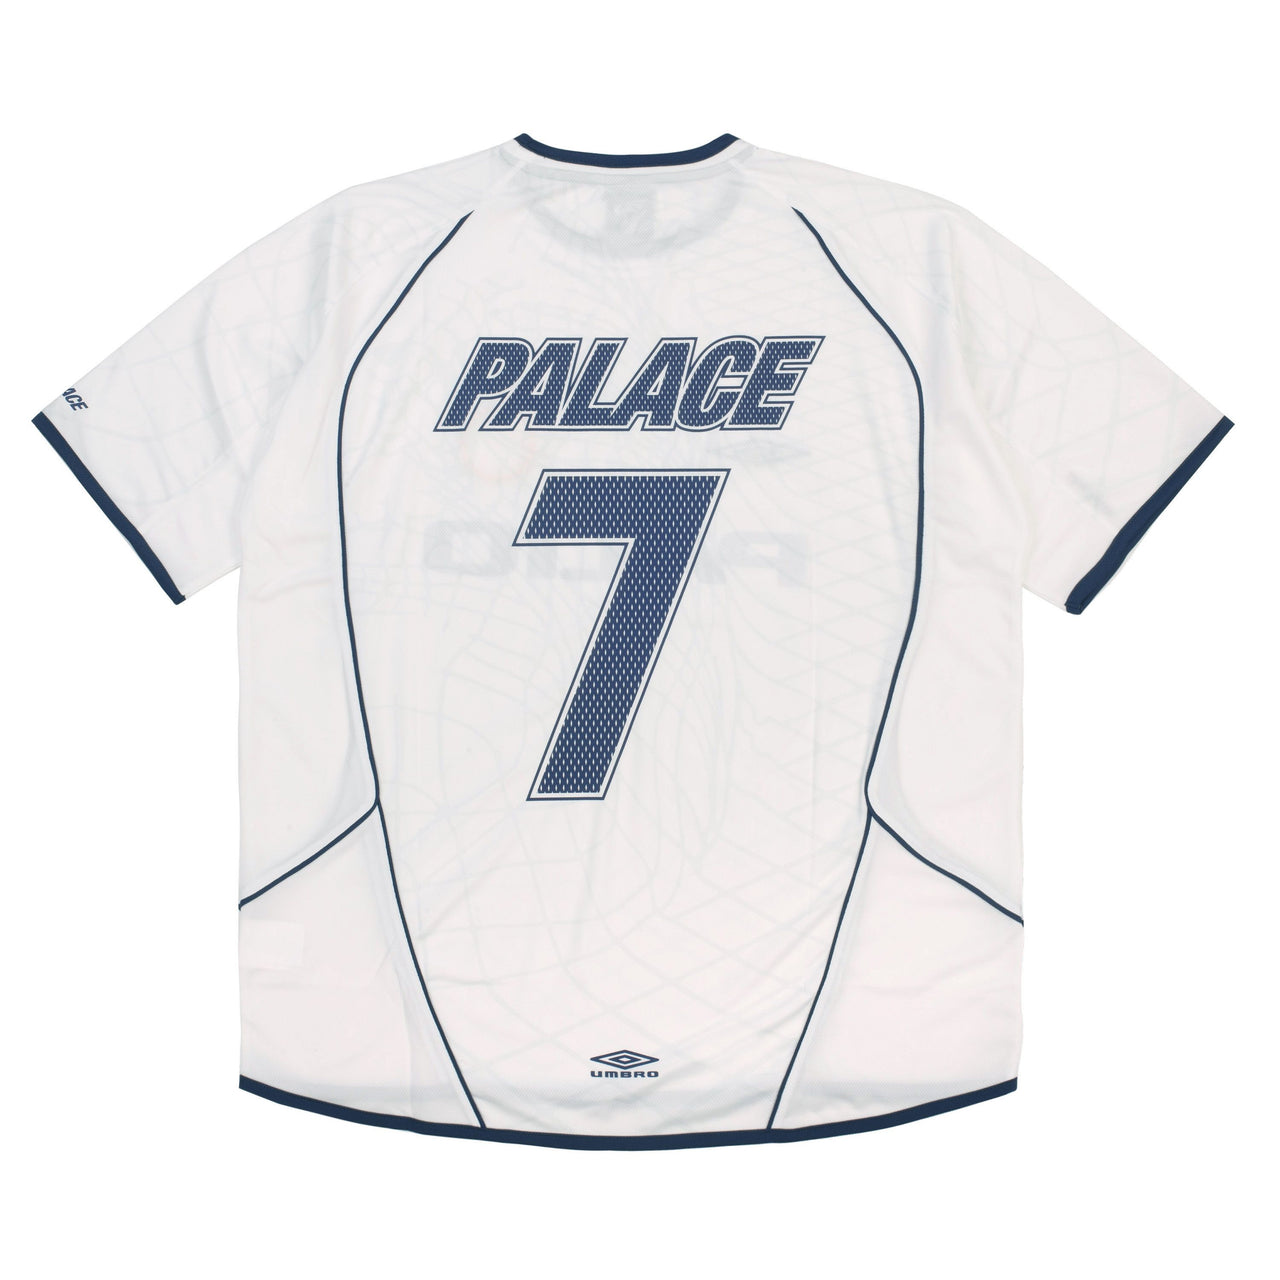 Palace x Umbro Home Shirt White